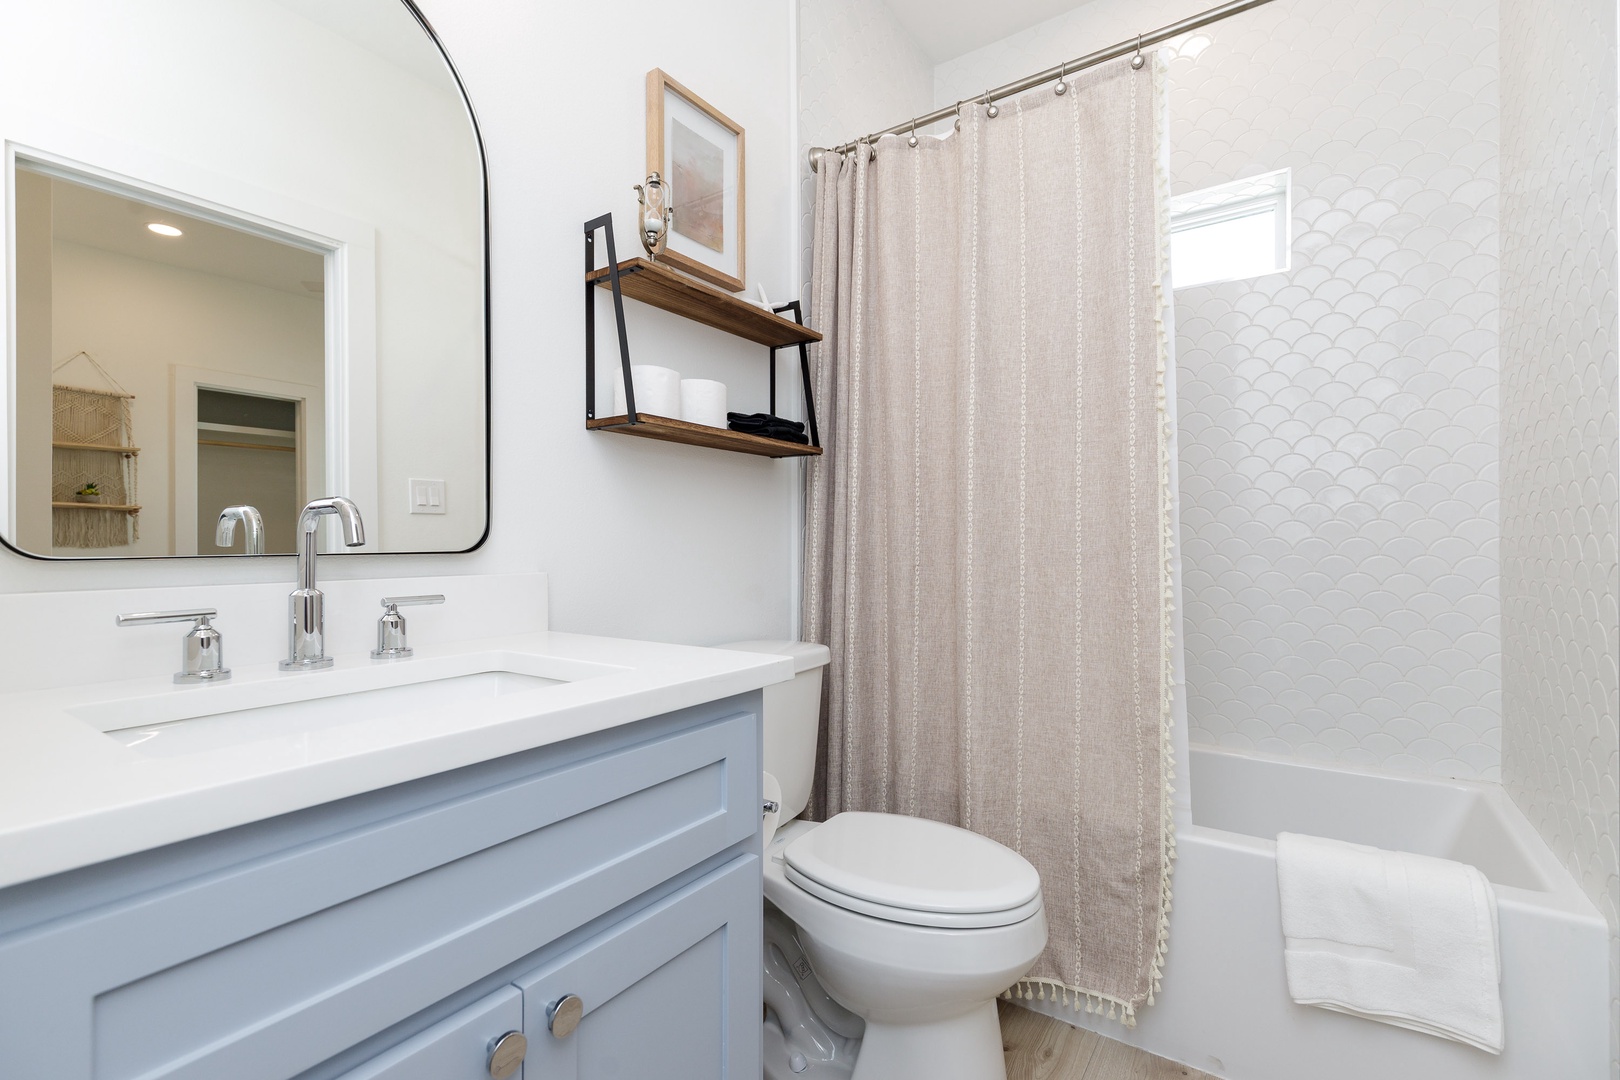 The queen en suite includes a single vanity & shower/tub combo